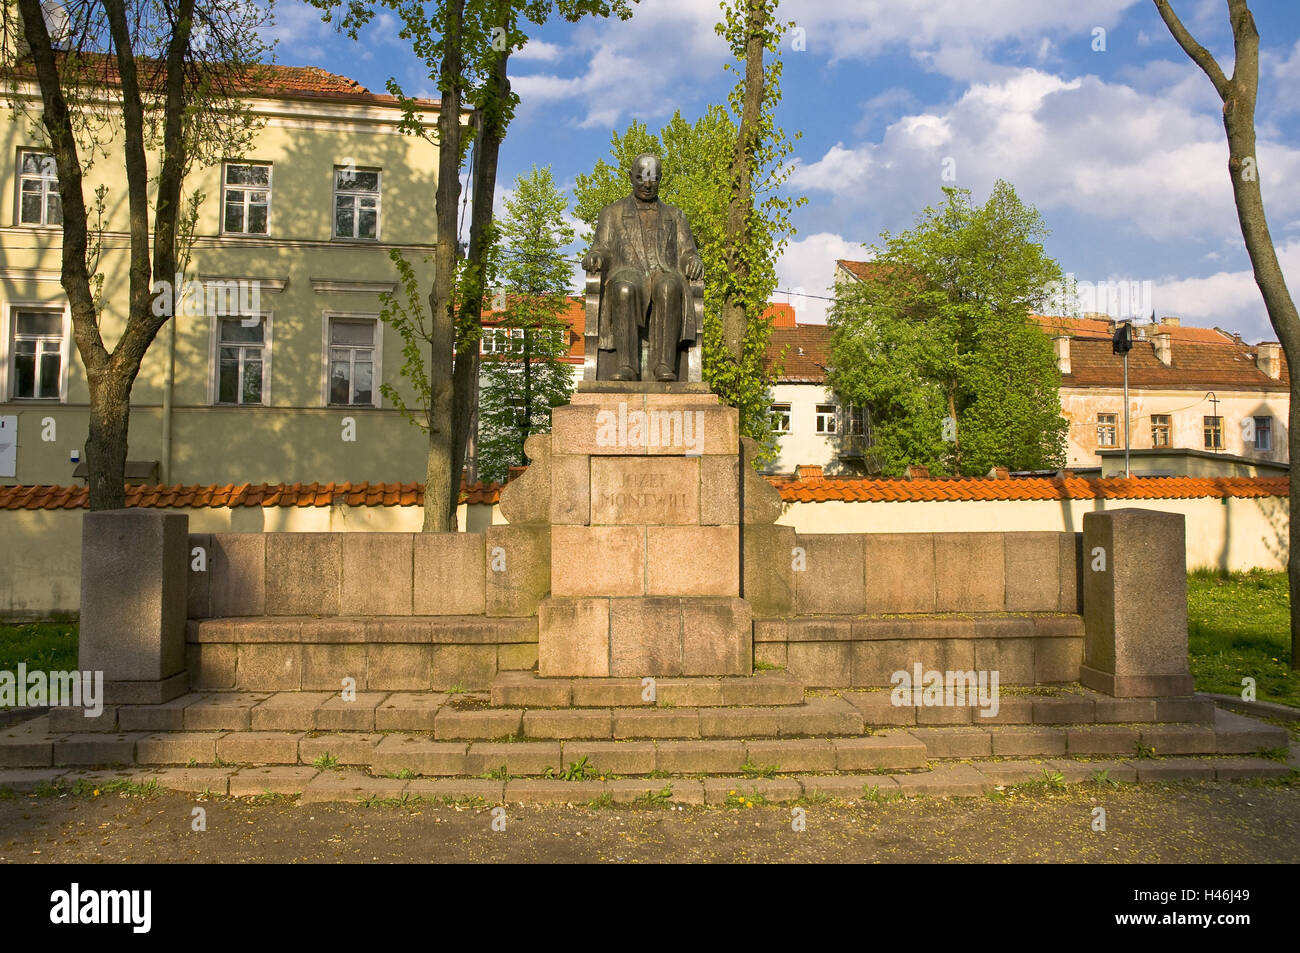 Lithuania, Vilnius, old town, Traku Gatve, monument, Jozef Montwill, Stock Photo